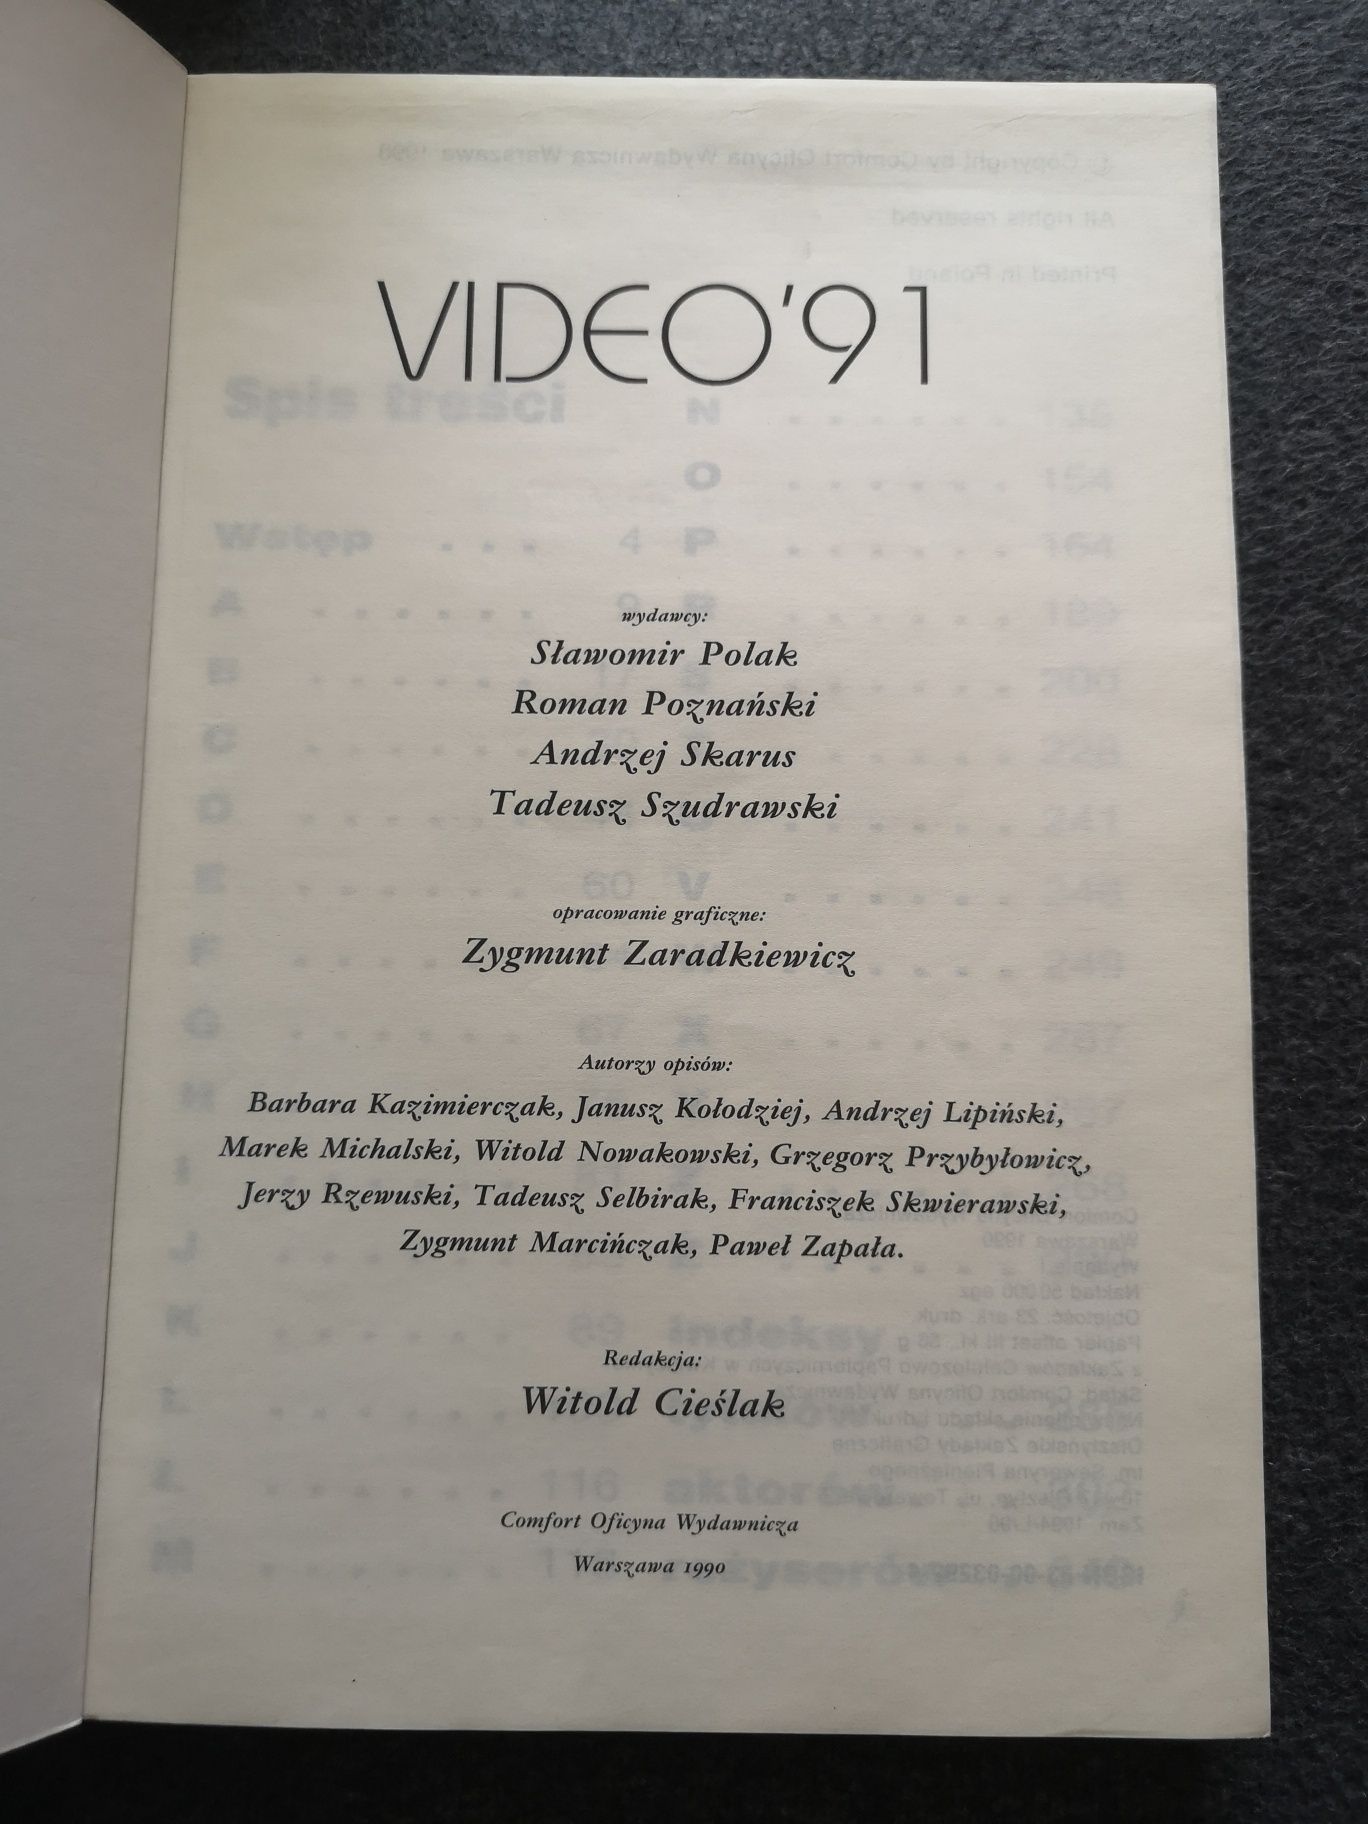 Katalog video 91 rok